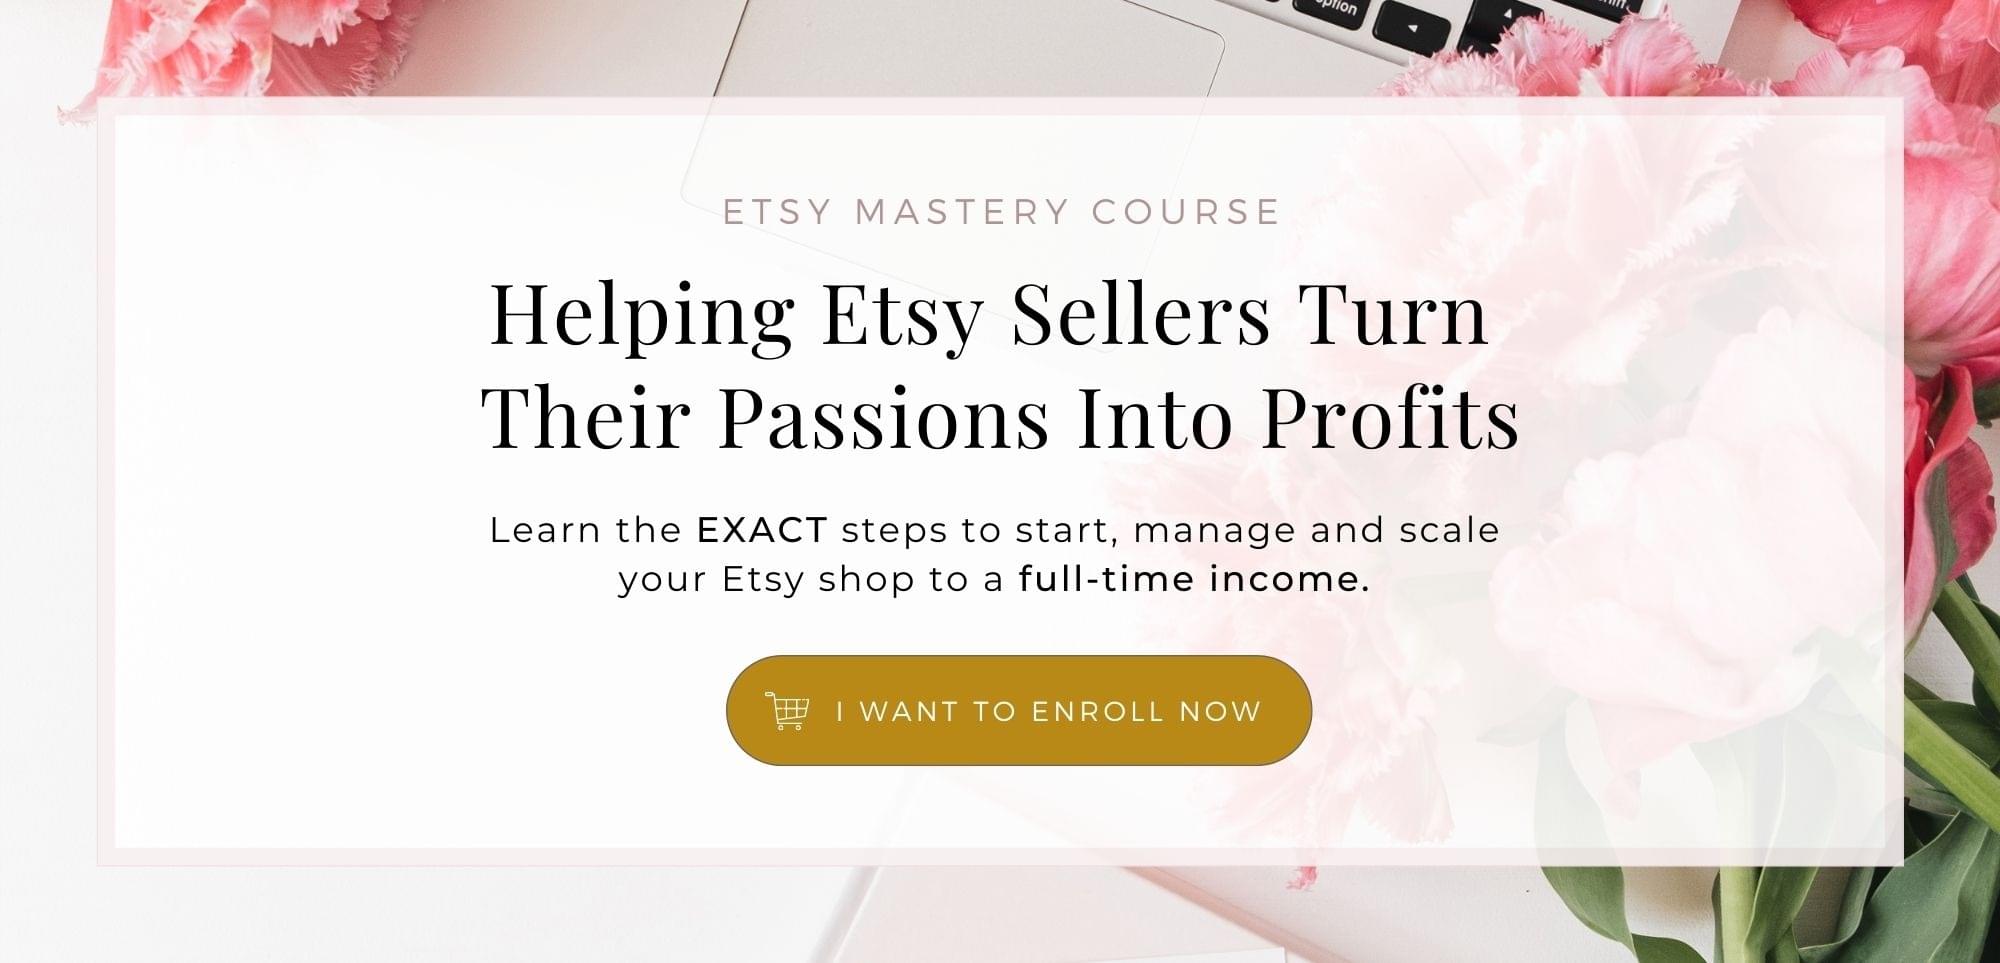 Etsy-Mastery-Course